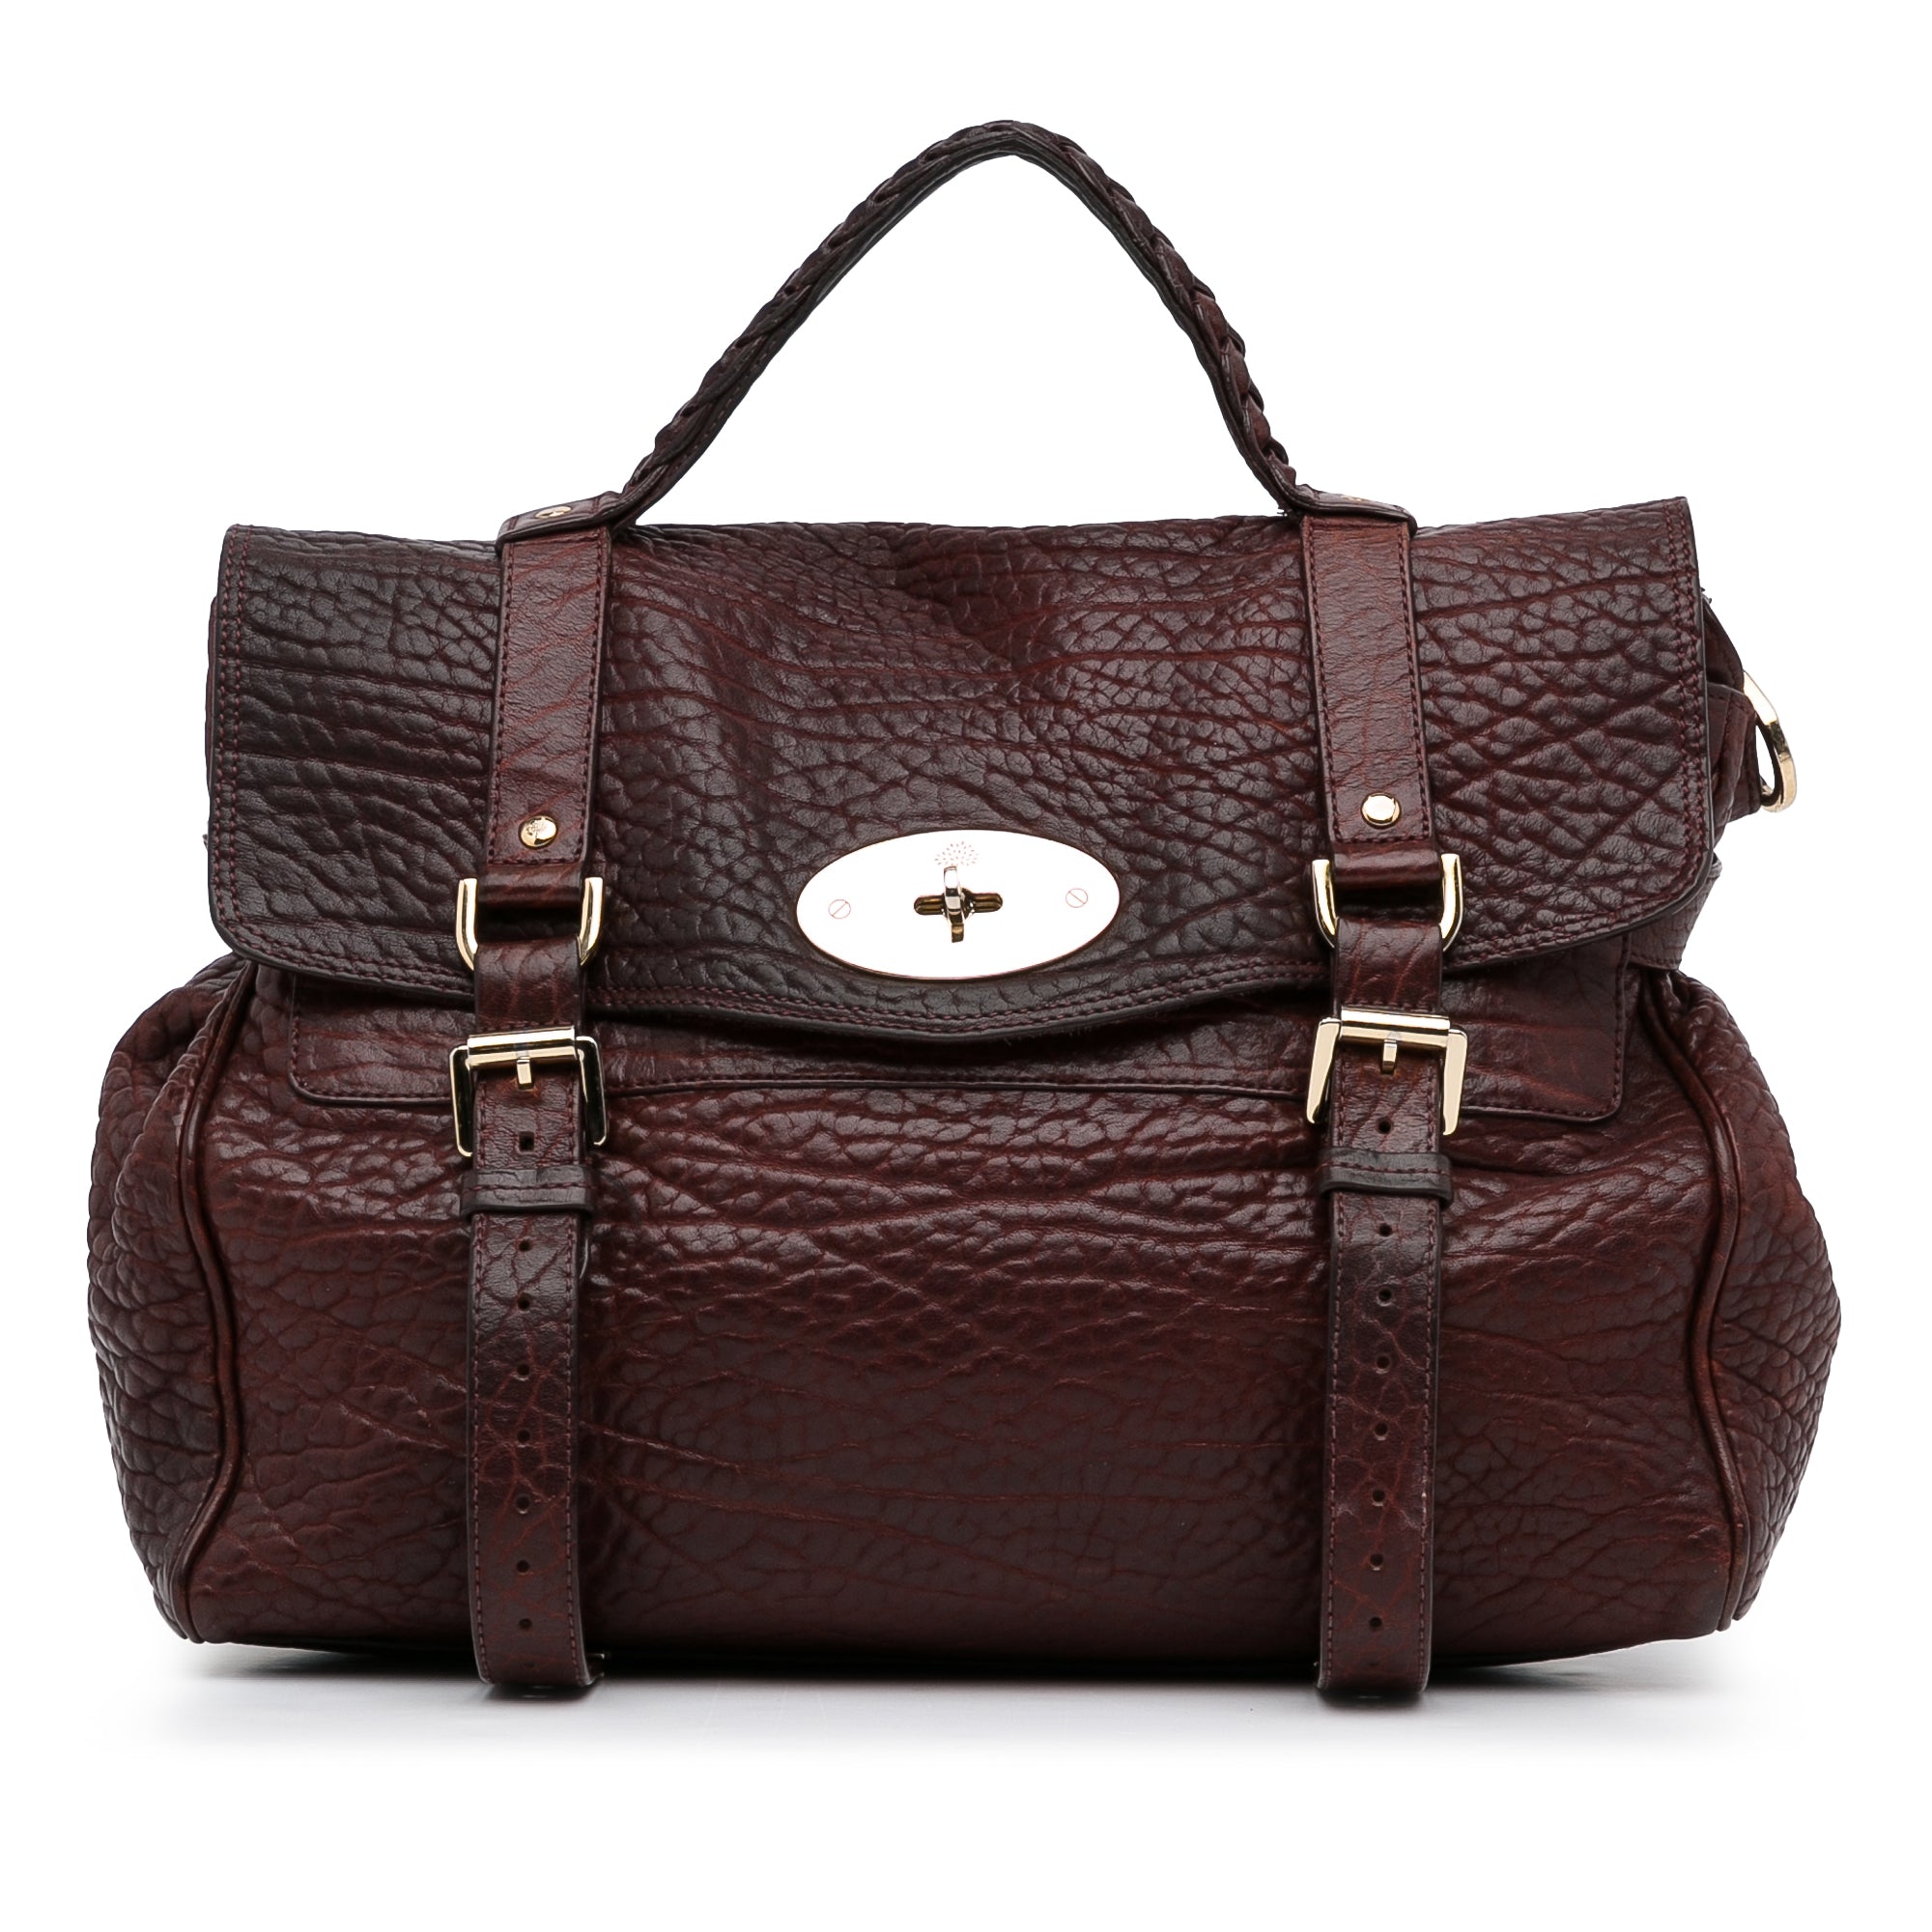 Money bags: the story behind Mulberry's Alexa, Handbags